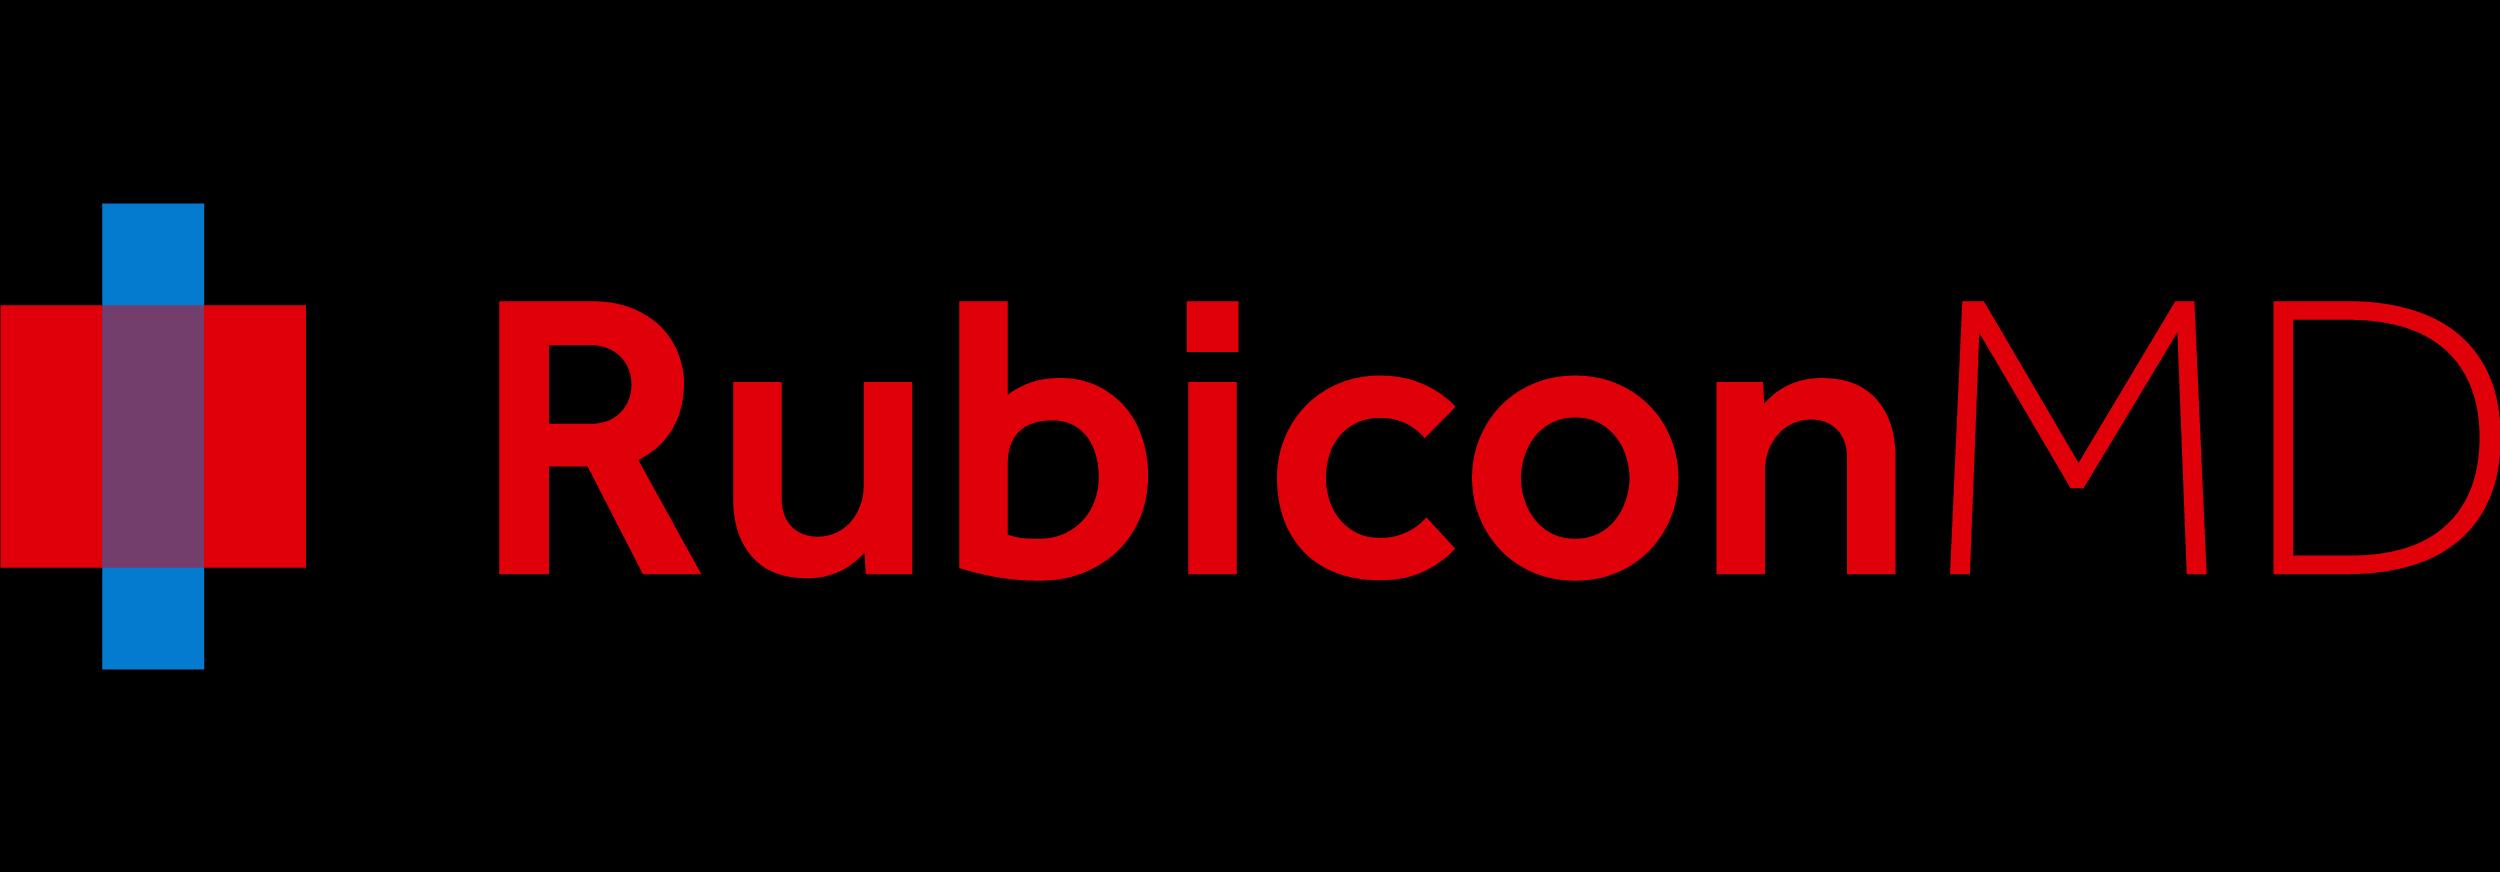 RubiconMD_logo